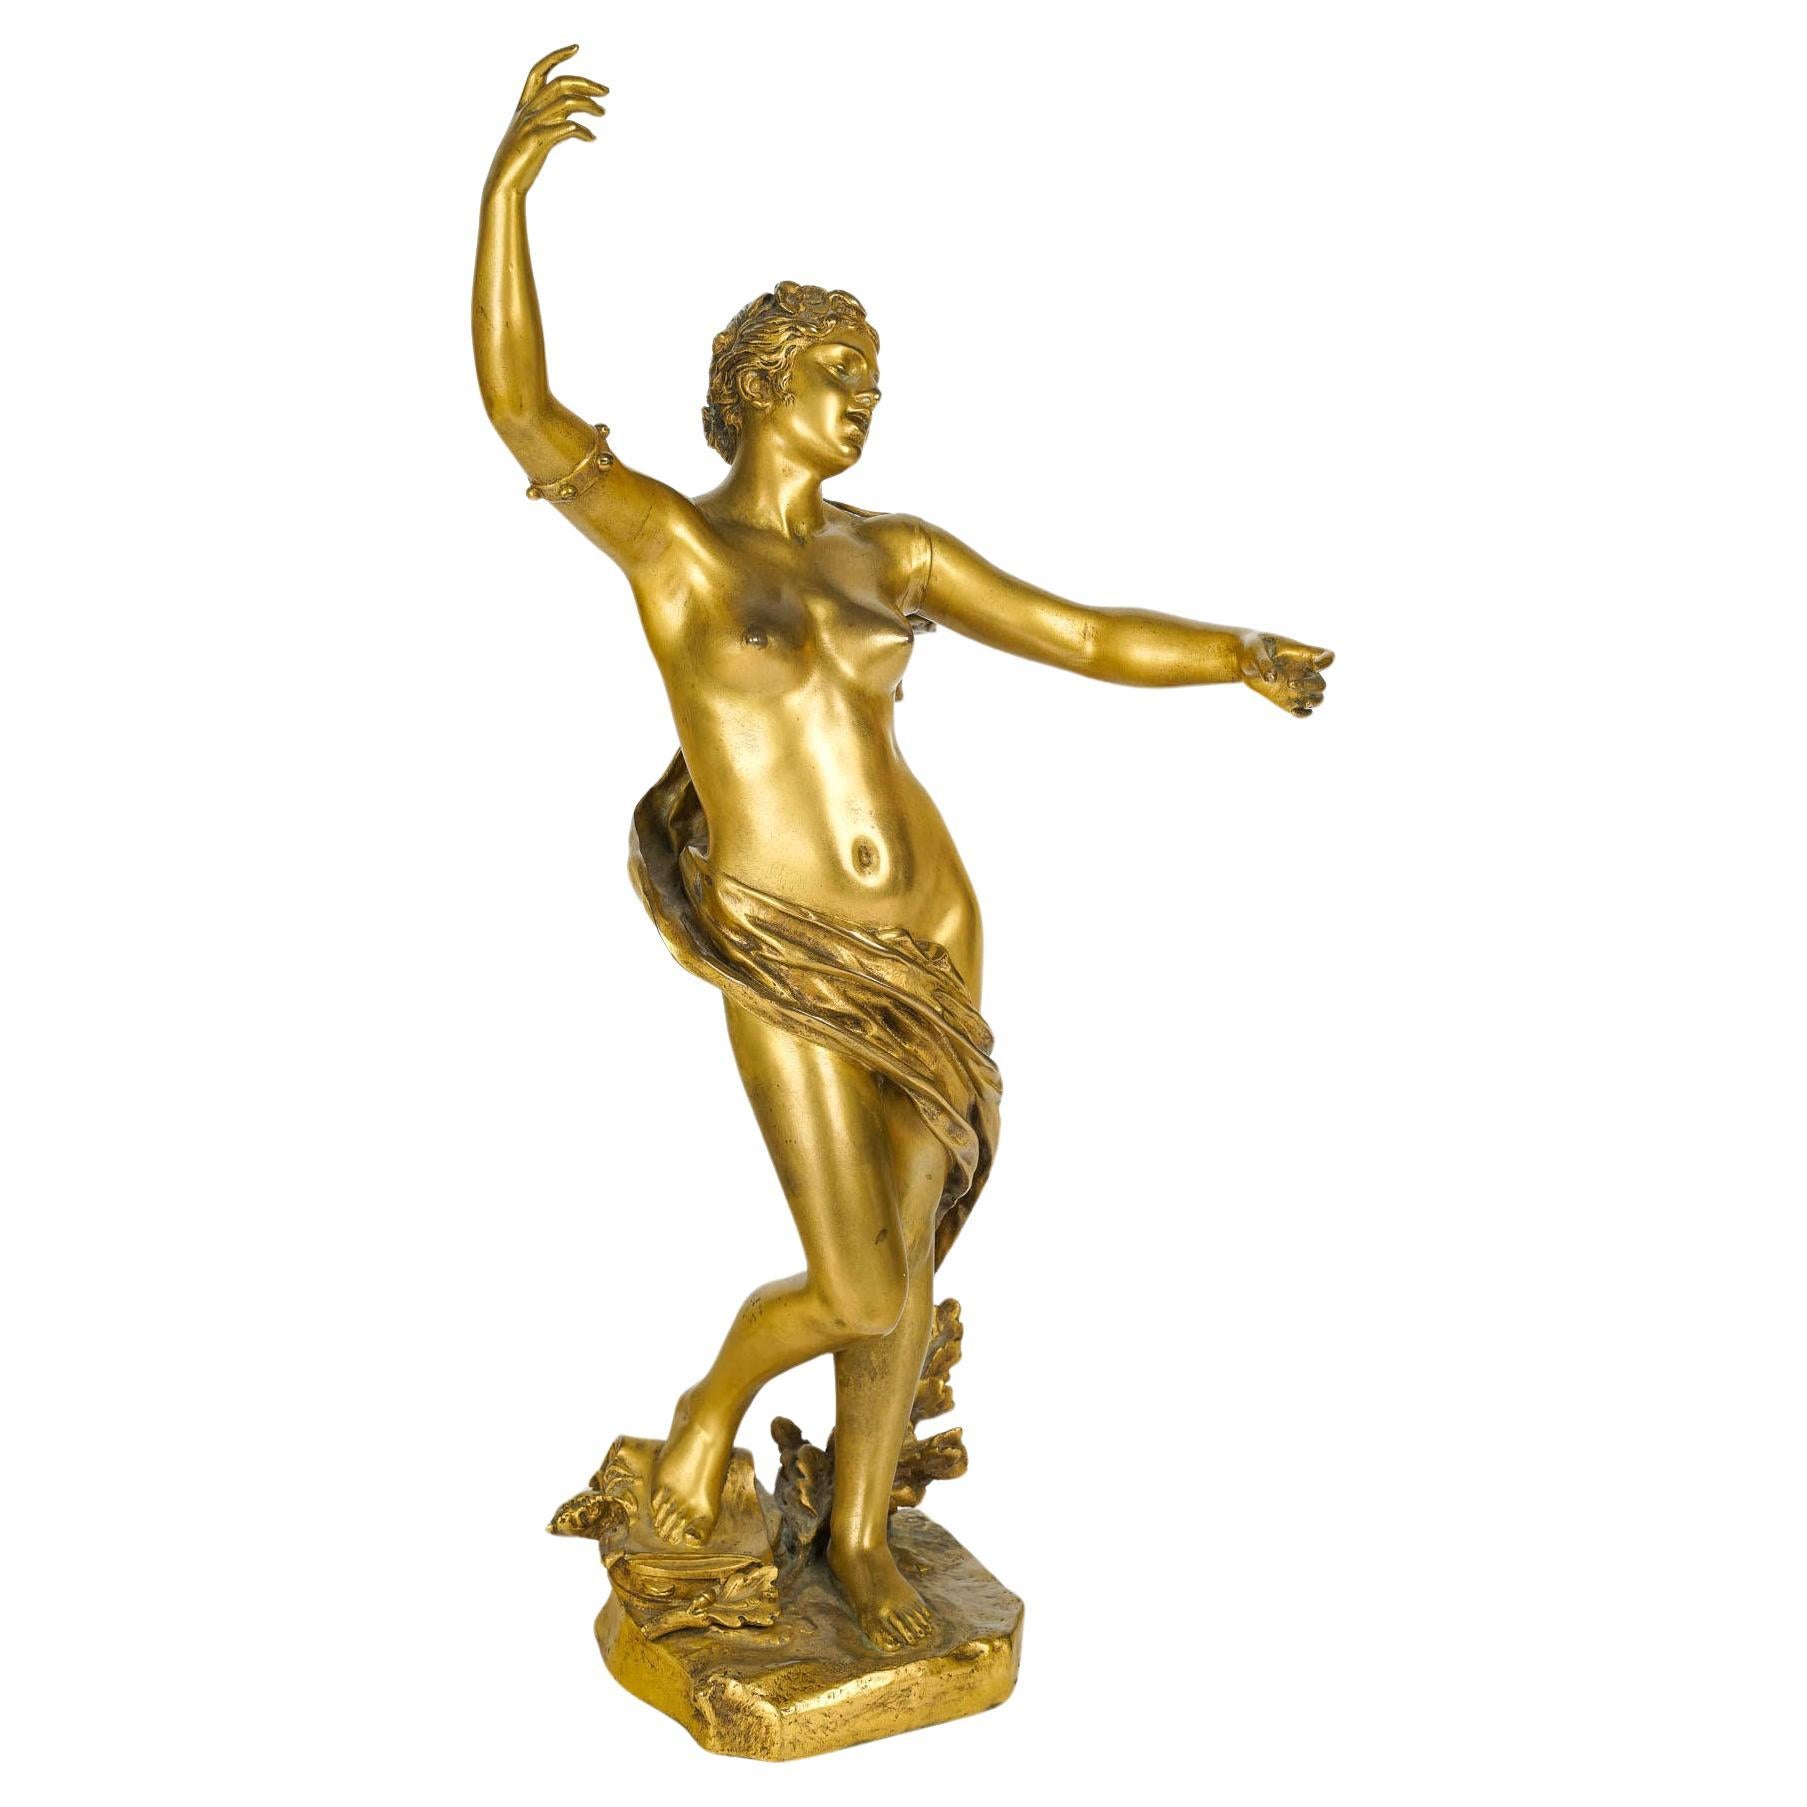 Sculpture en bronze doré de Felix Charpentier, XIXe siècle, période Napoléon III.